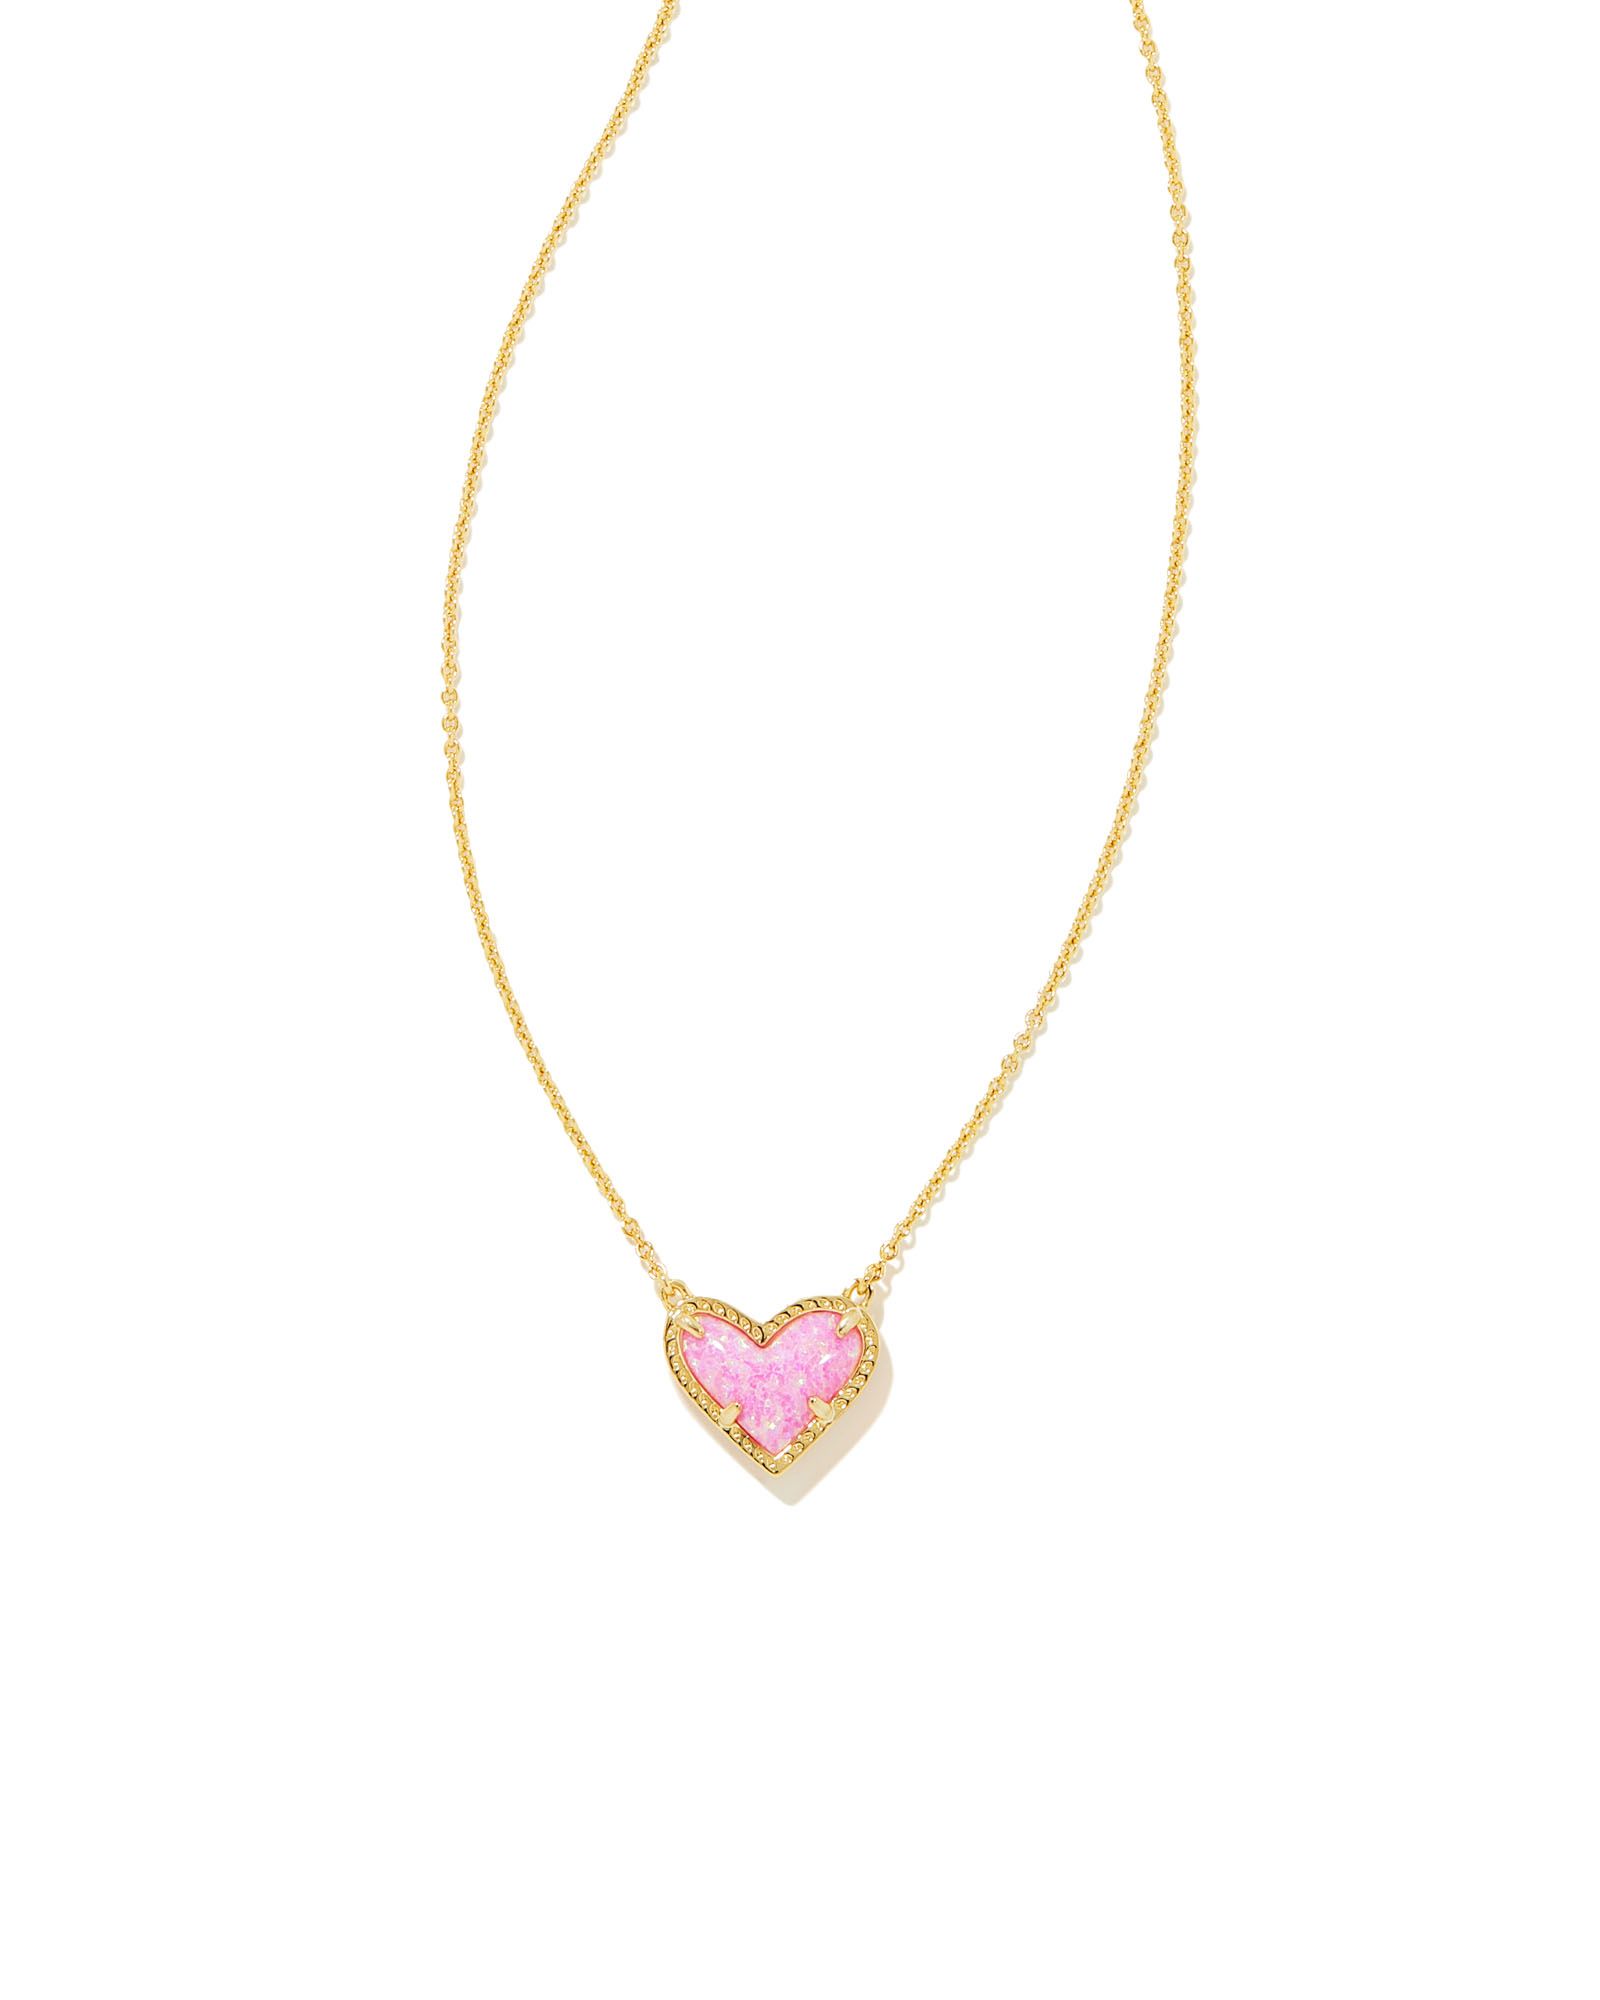 Ari Heart Gold Pendant Necklace in Bubblegum Pink Kyocera Opal | Kendra Scott | Kendra Scott